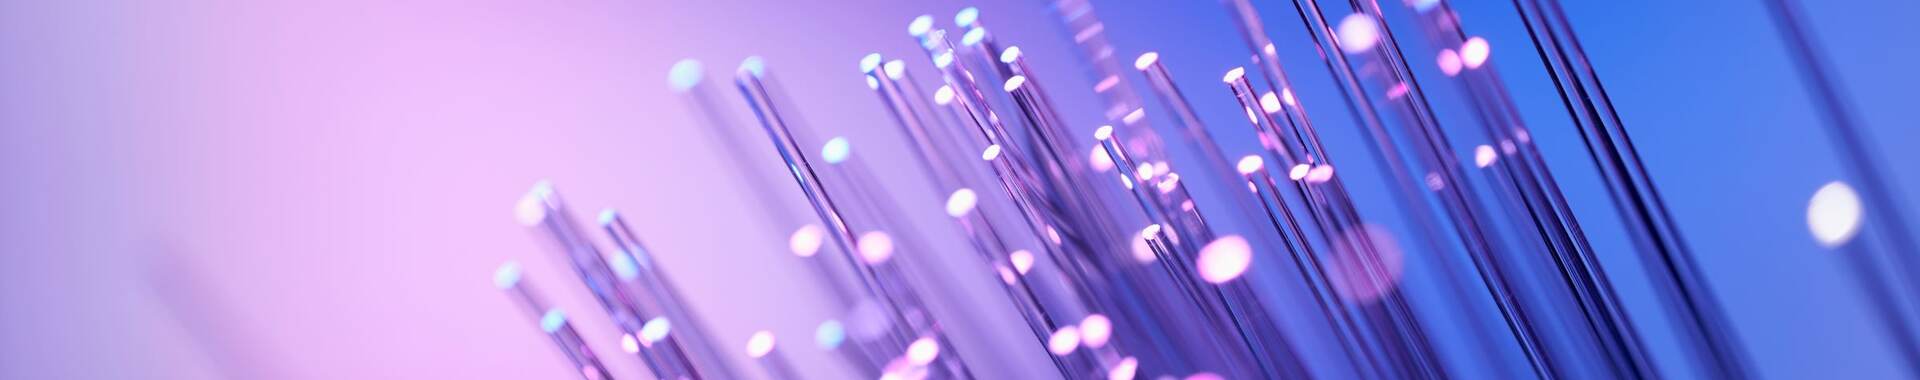 Fiber optics abstract background - Purple Blue Data Internet Technology Cable.